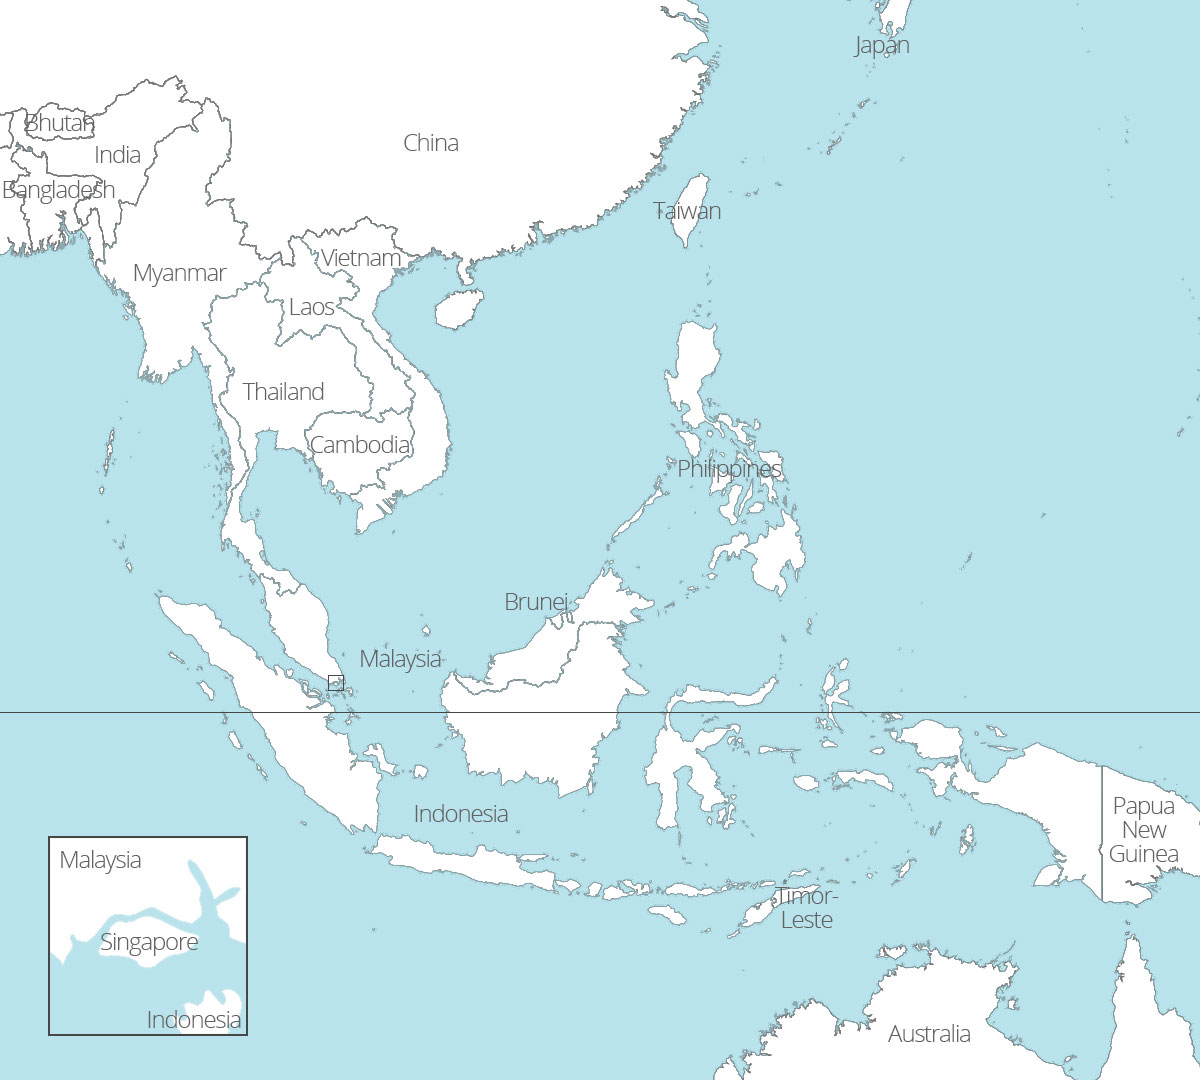 Umyvadlo Ni Sn It Zp T Blank High Resolution Asia Map Z Vrat Dev T Koln